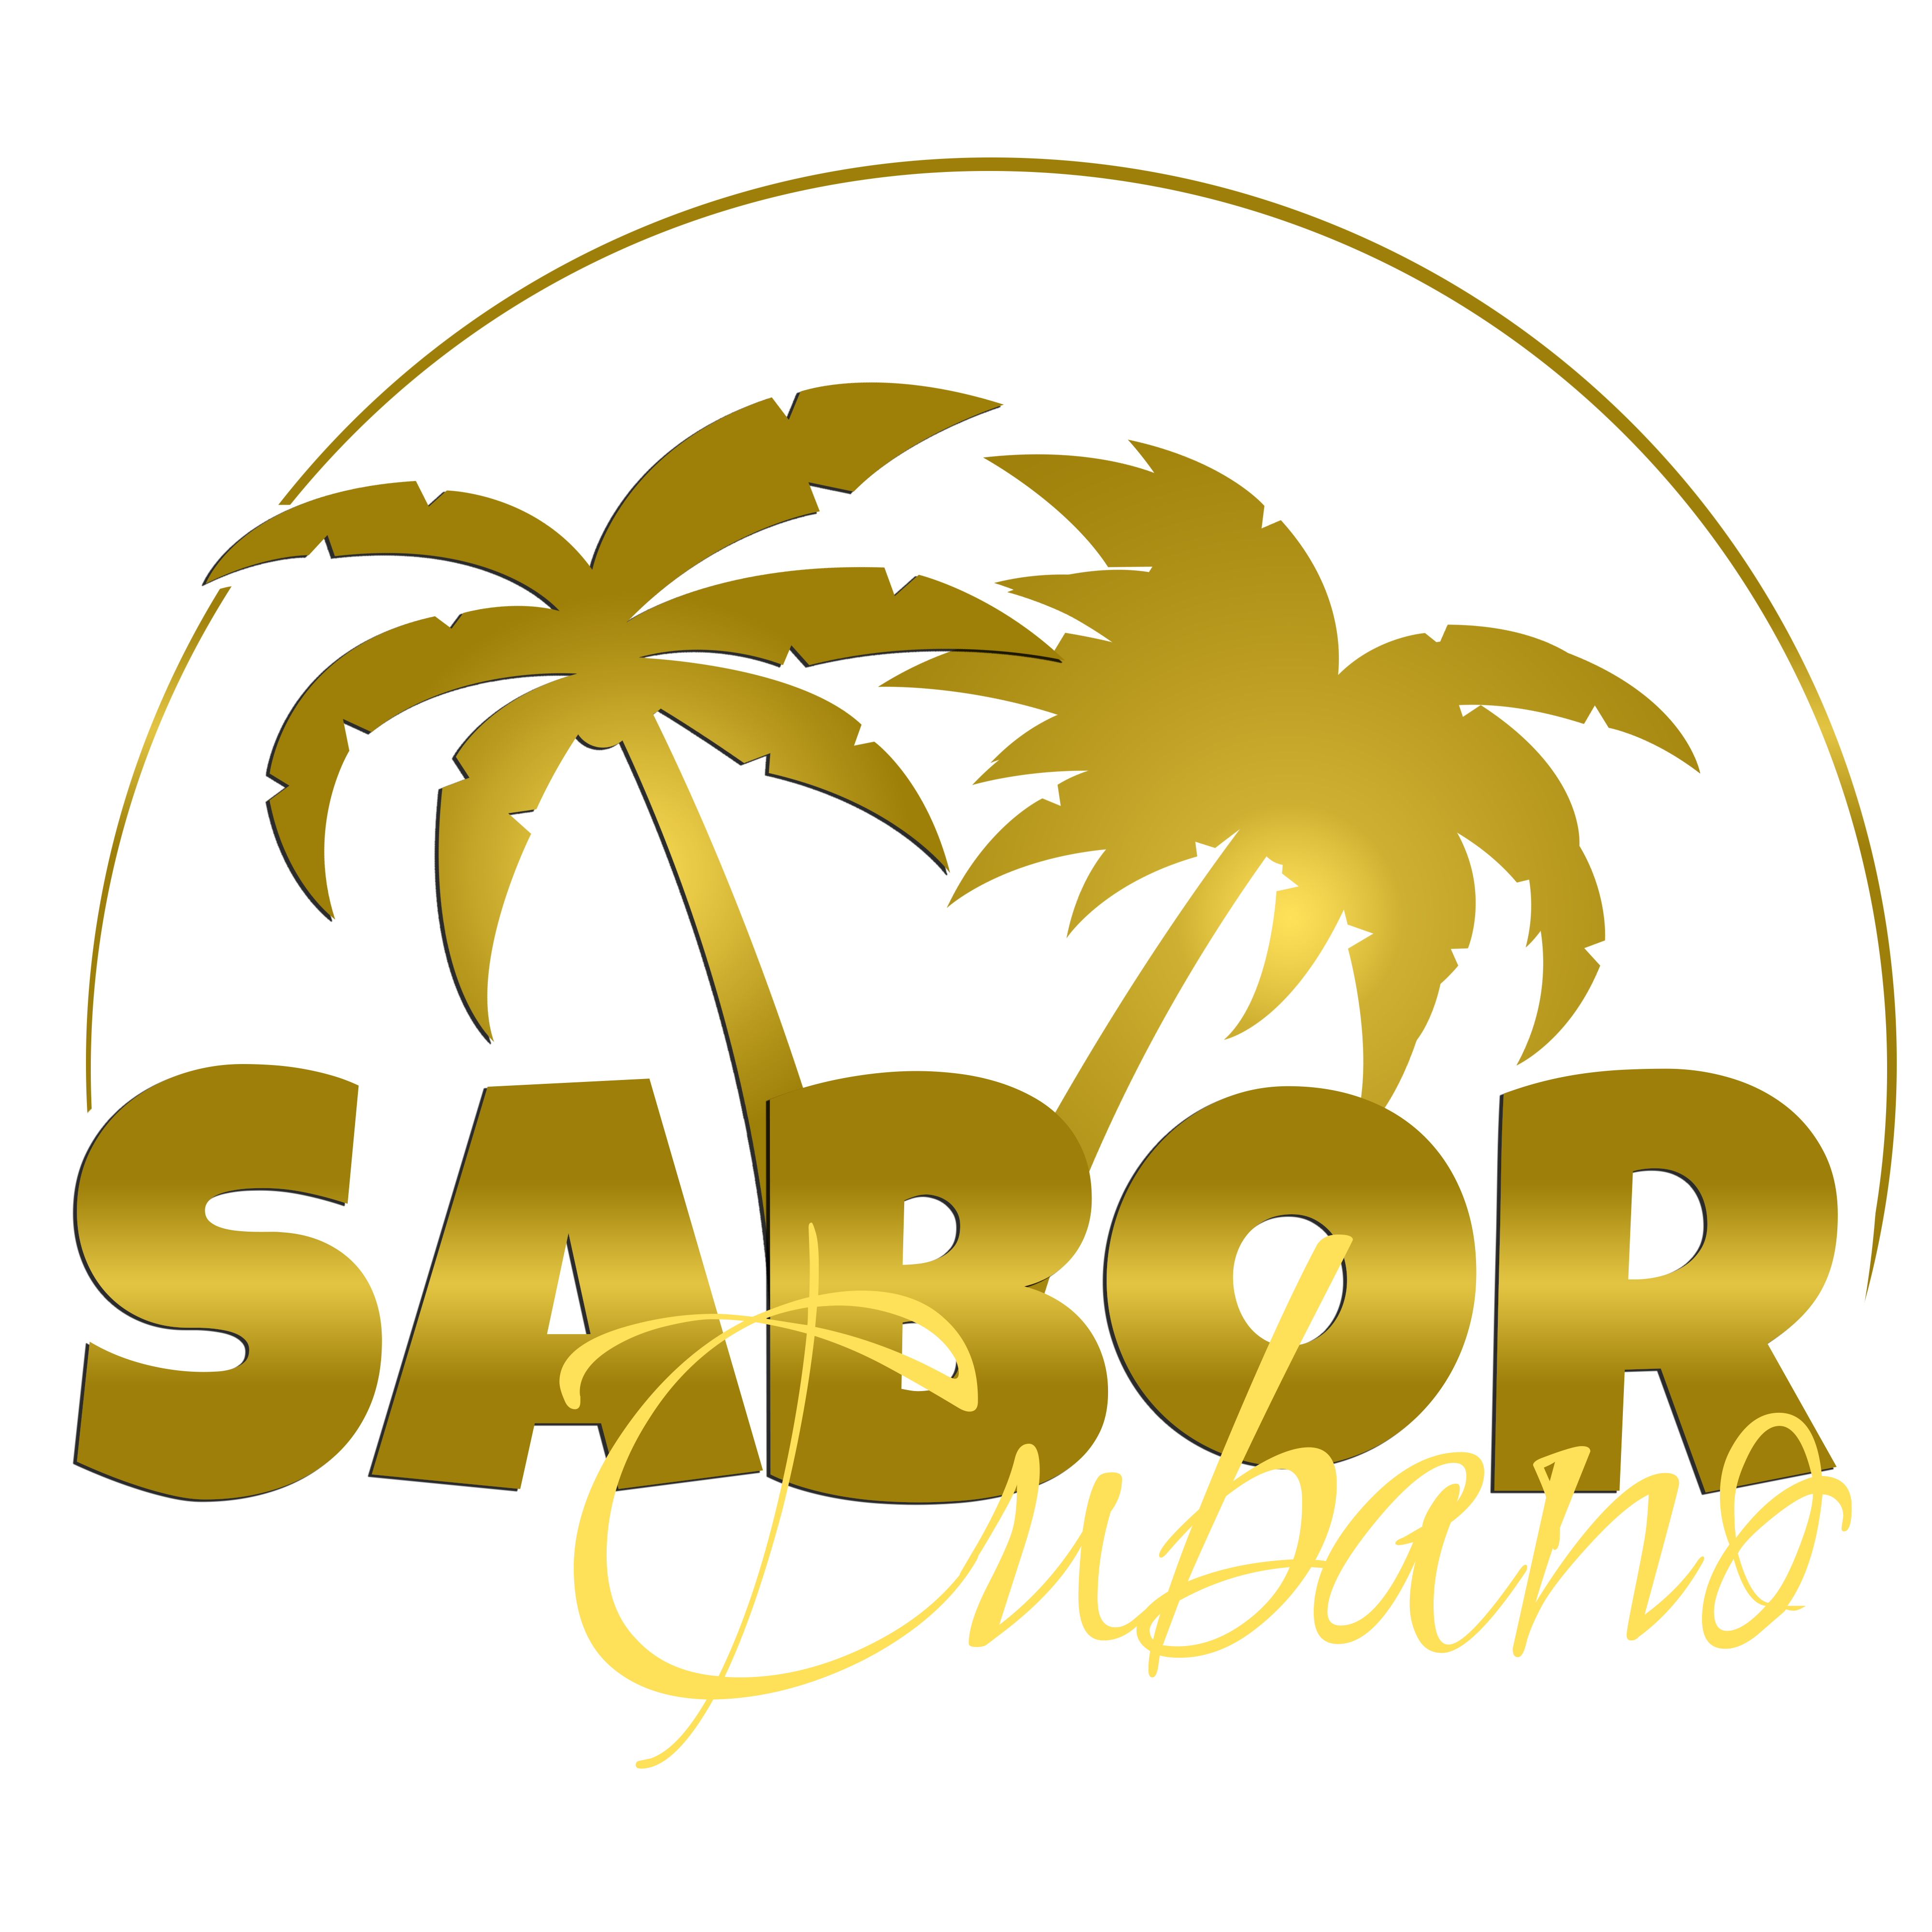 Restaurant Sabor Cubano, Cubaans restaurant